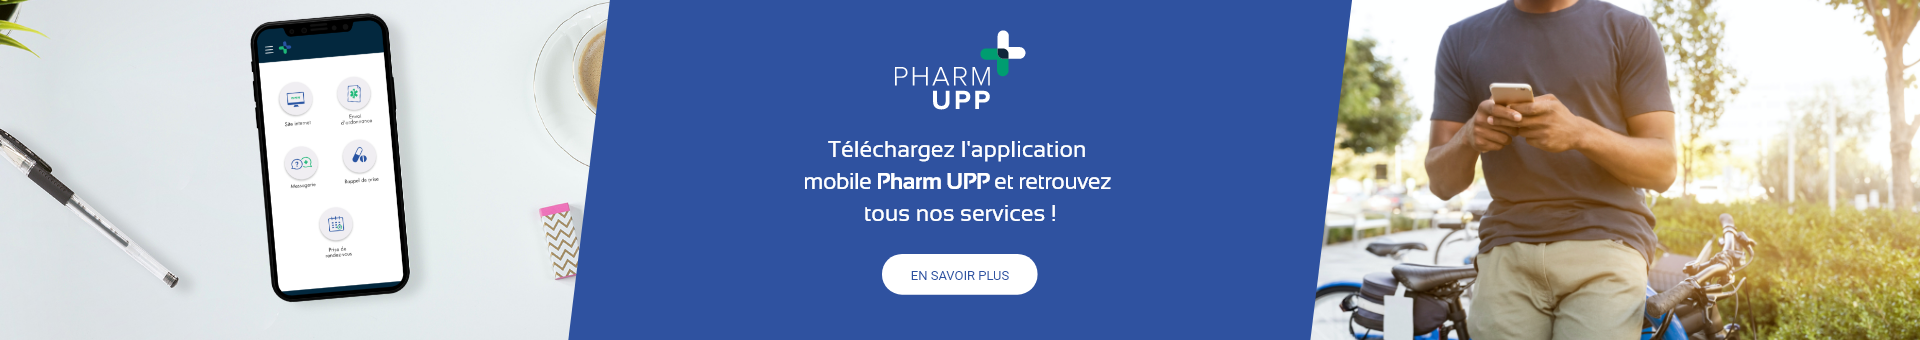 Pharmacie Du Marchidial,Champeix